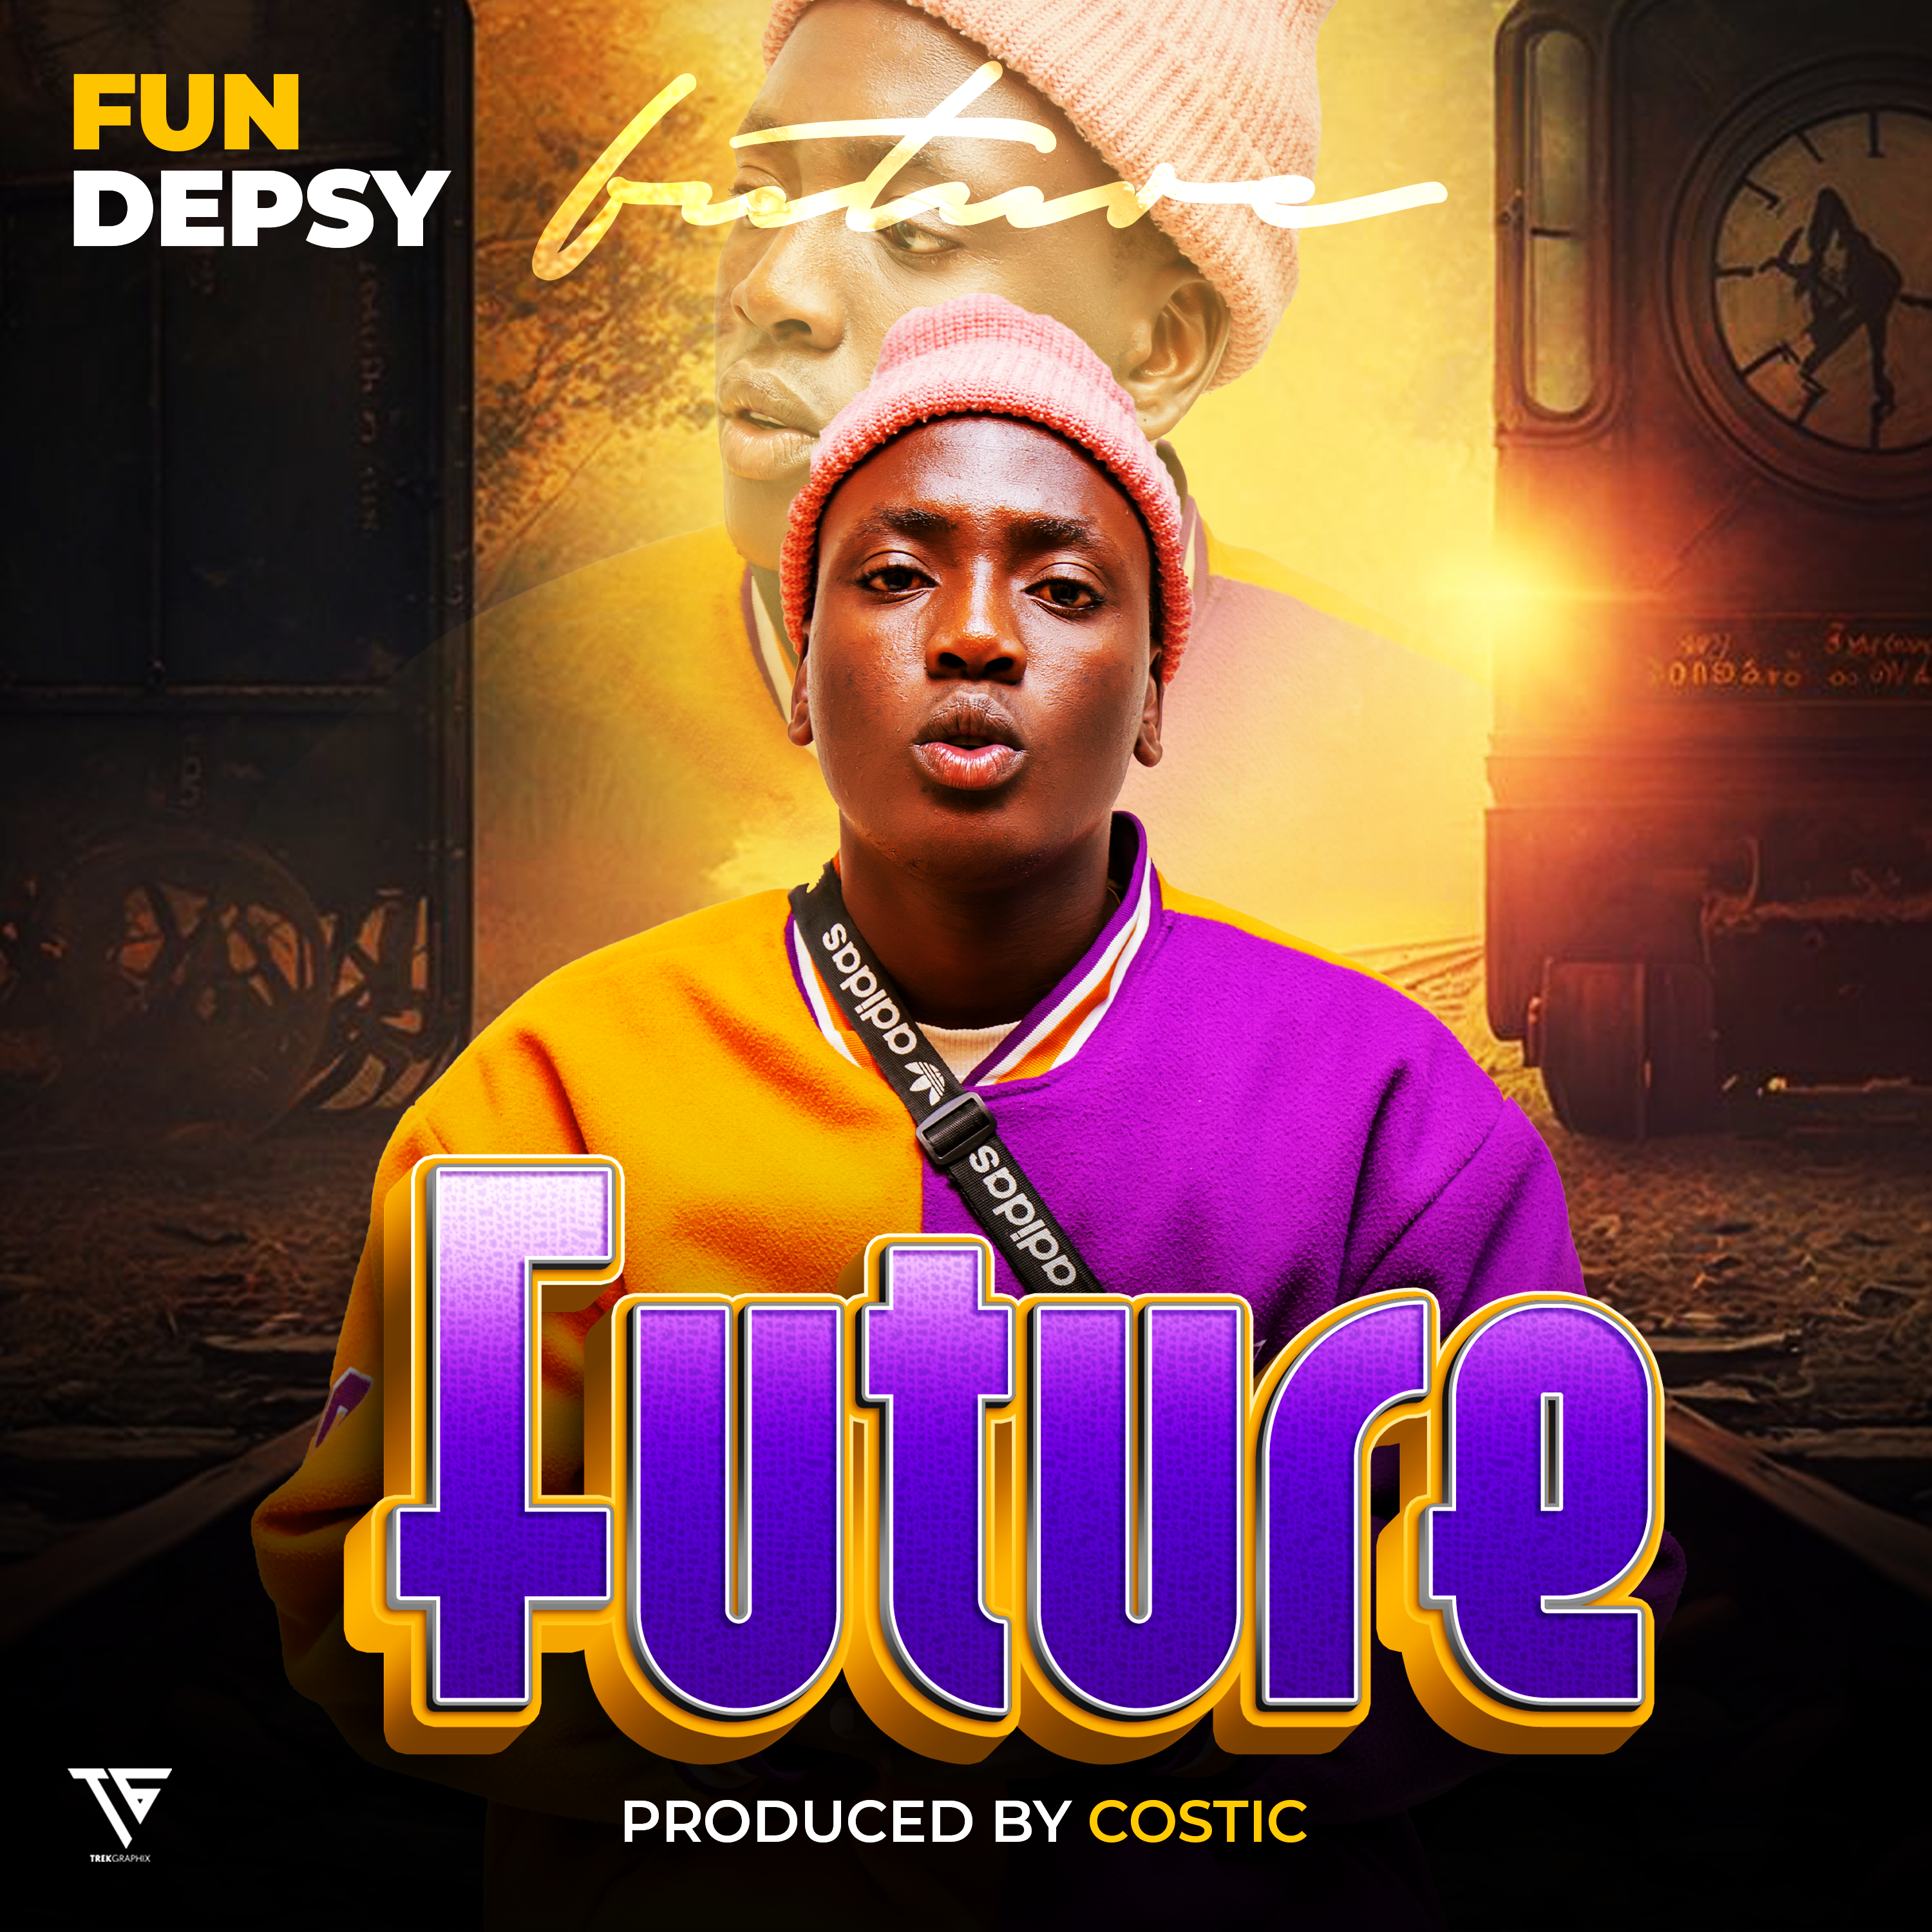 Fun Depsy - Future (pro by costic)